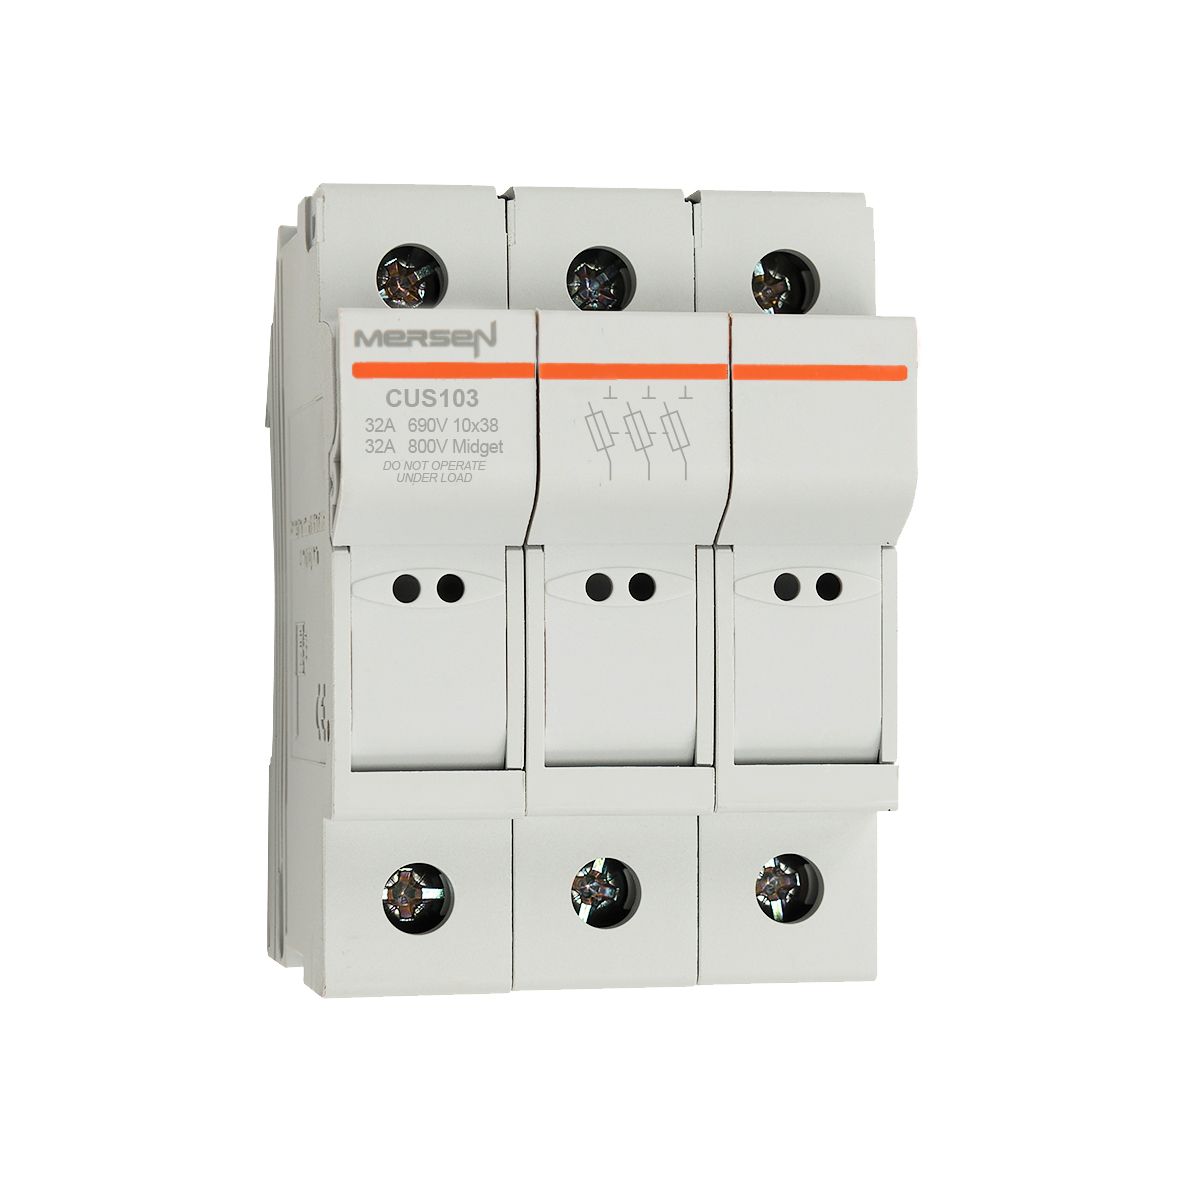 A1062715 - modular fuse holder, UL+IEC, 3P, 10x38, MIDGET, DIN rail mounting, IP20